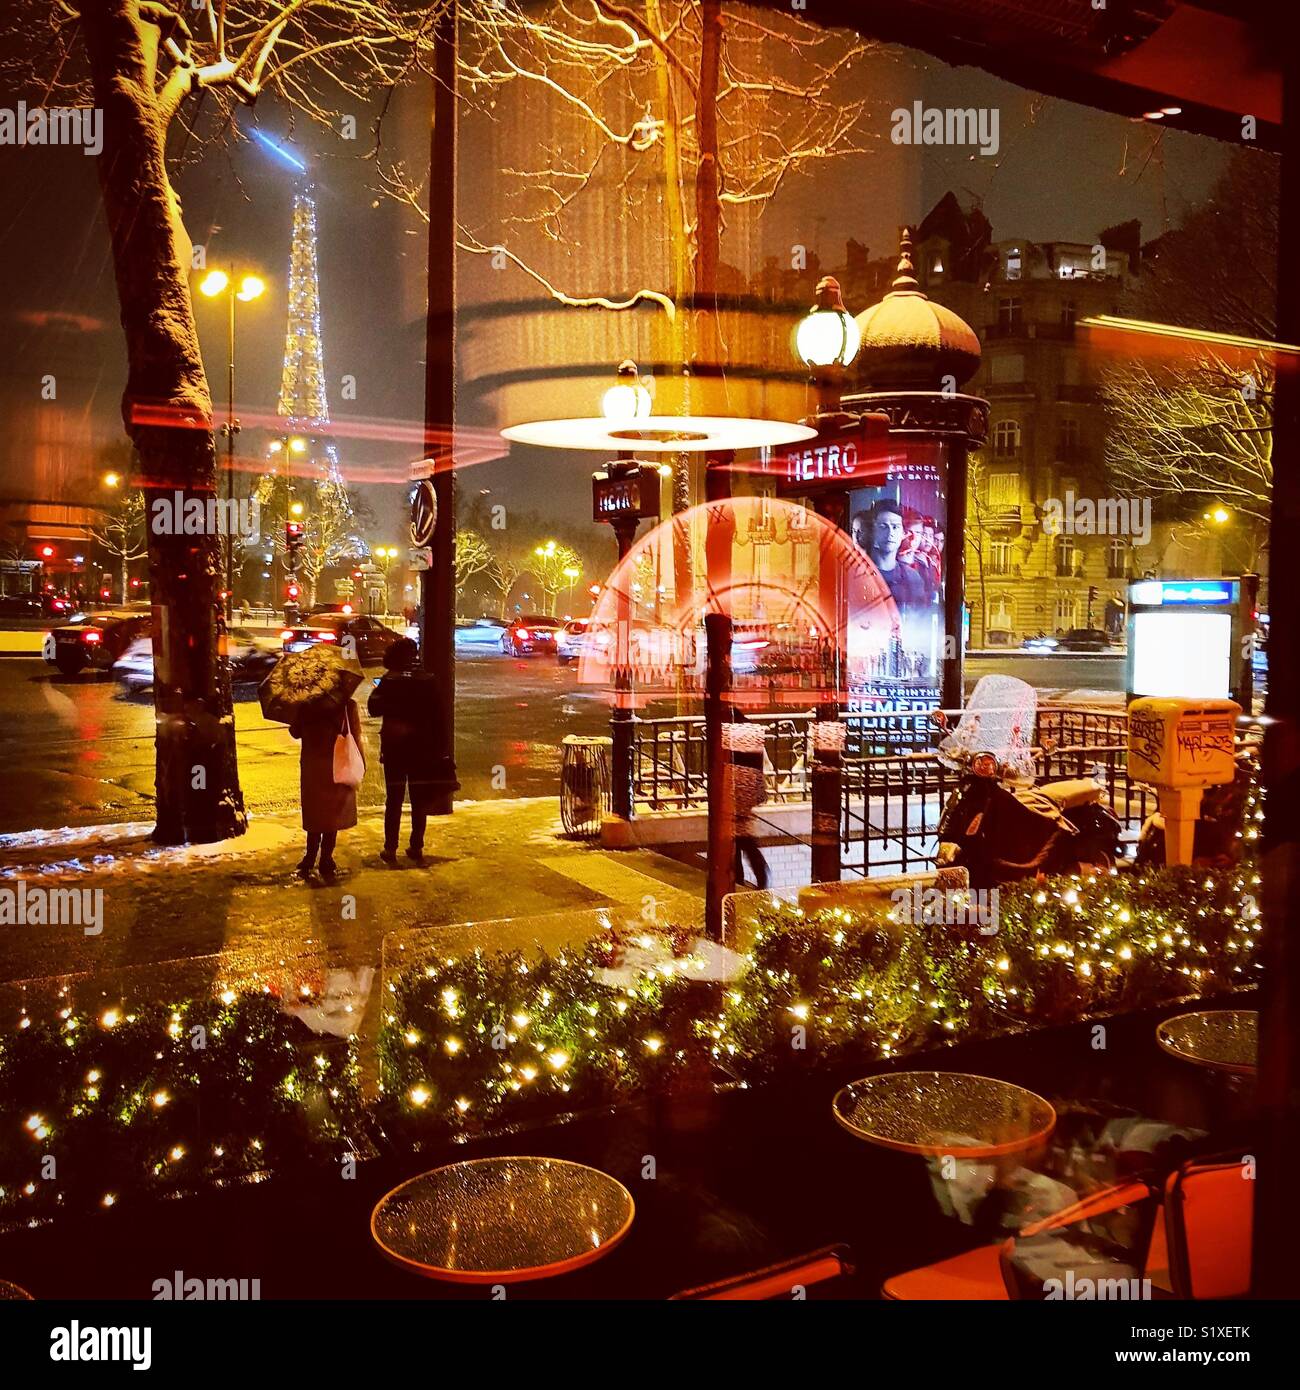 Eiffel Tower Restaurant - Lighting up the night 💫 📸 @noedelgados